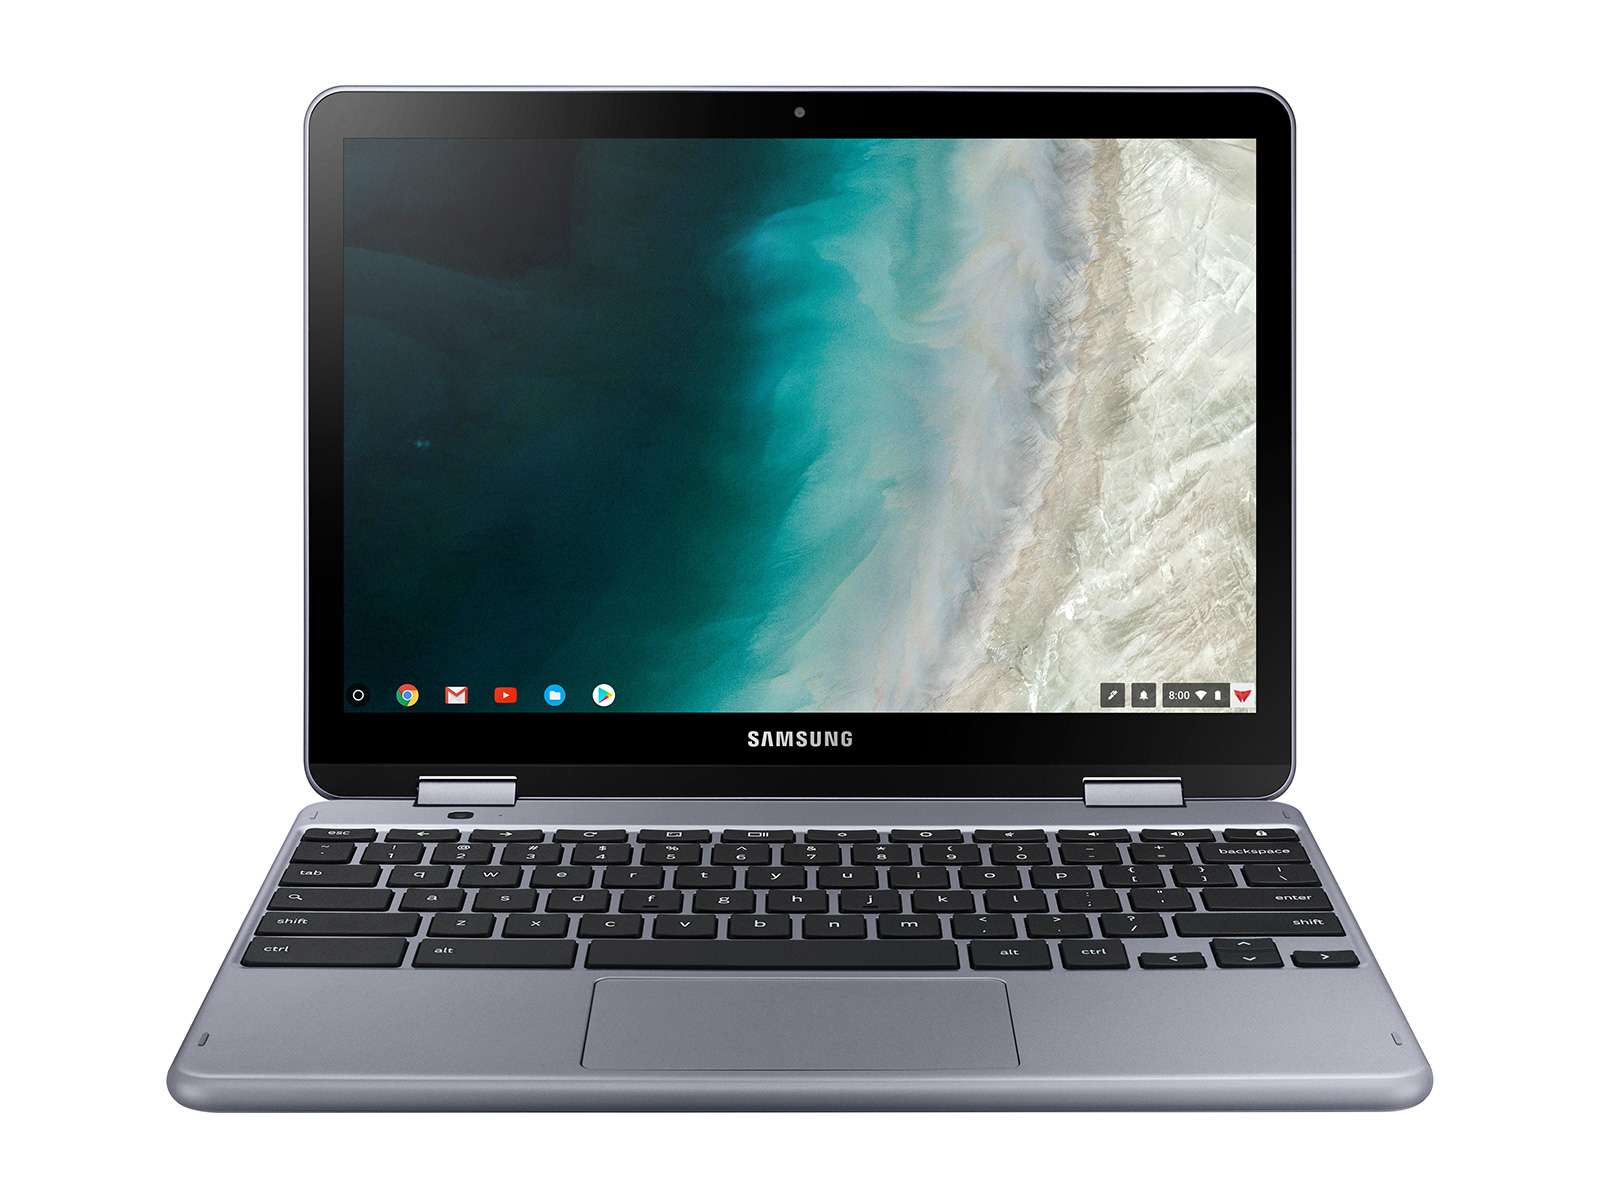 My Chromebook, the Samsung Chromebook Plus